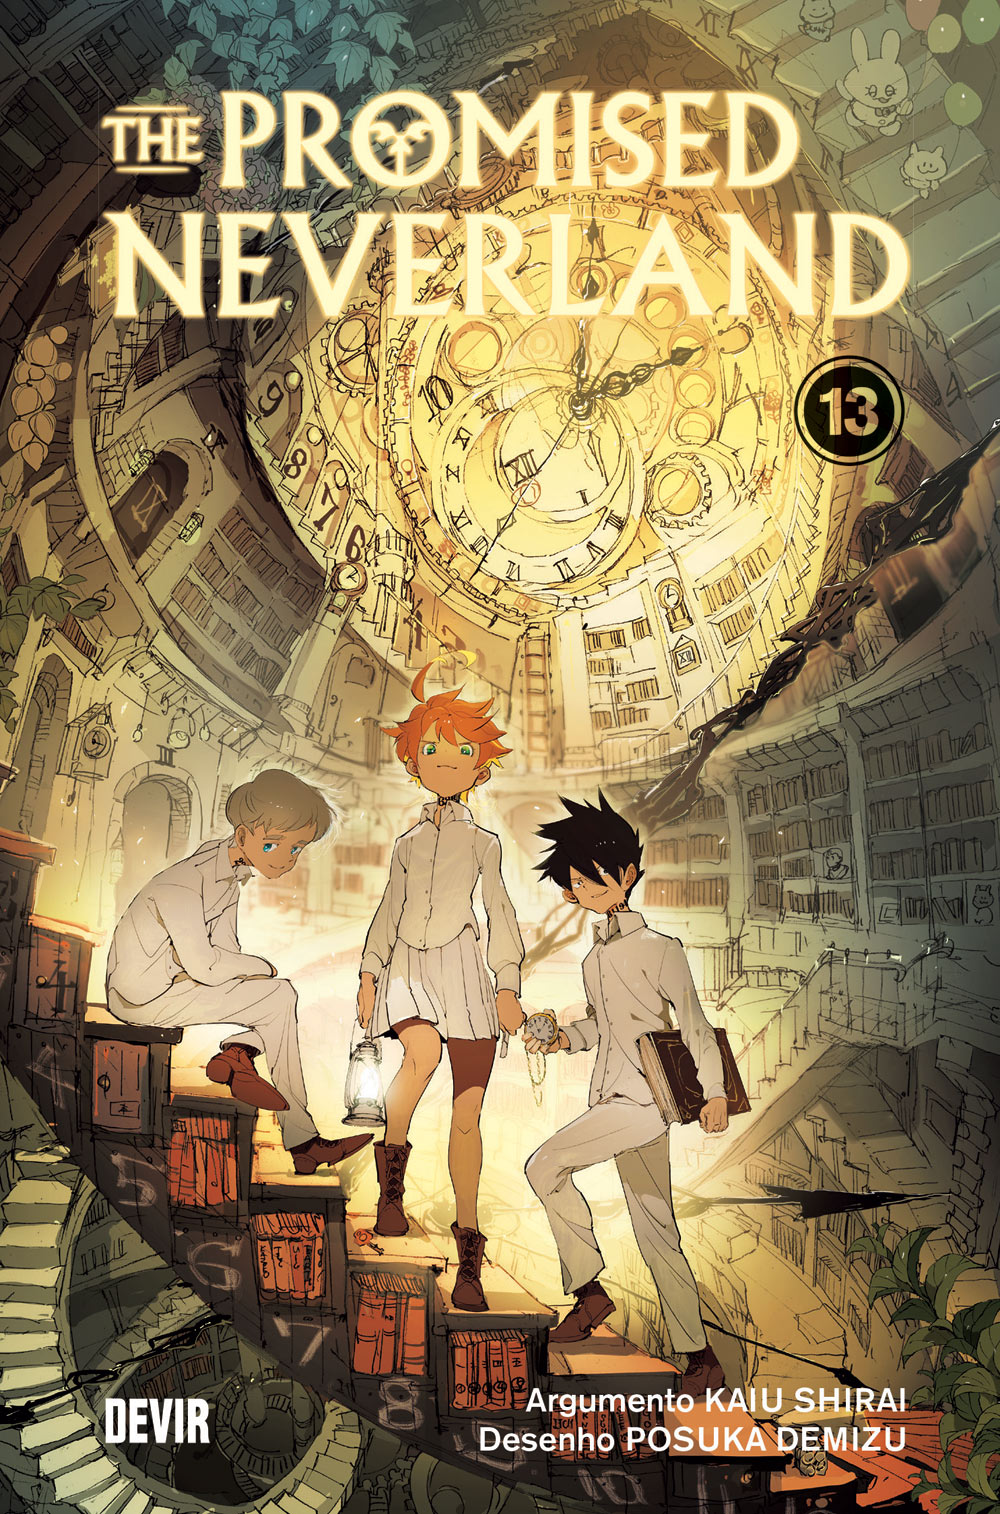 The Promised Neverland ganhará série de TV live-action